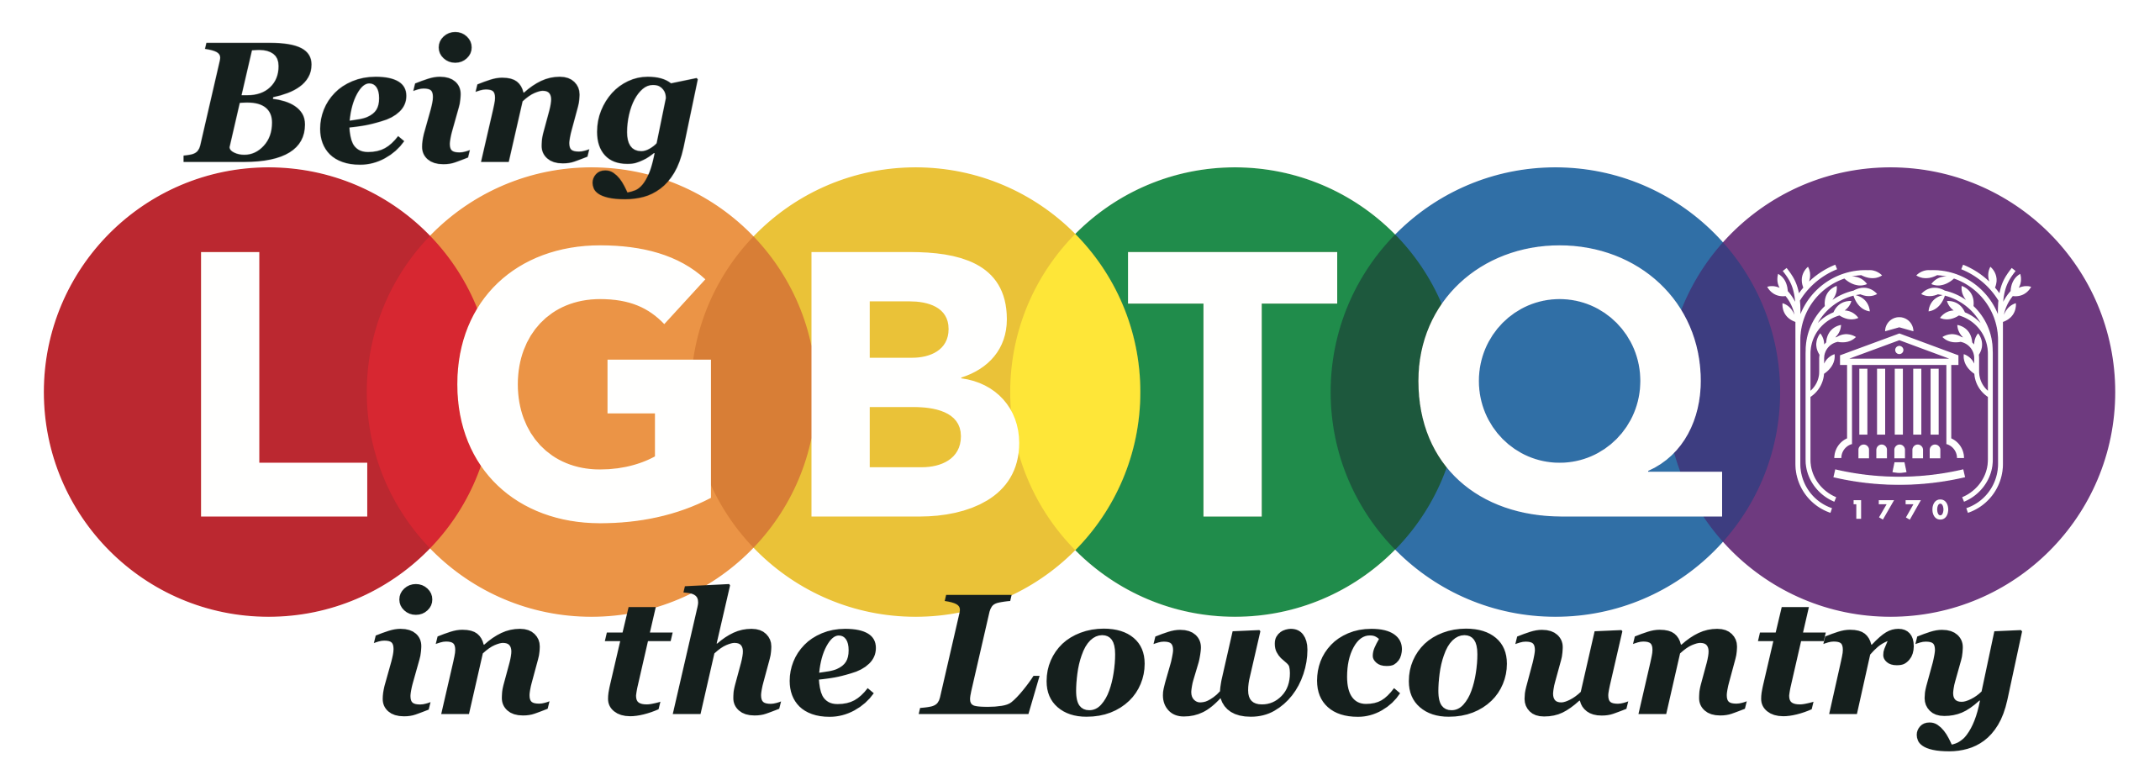 Screenshot-2020-02-05-09.22.09 Feb. 5-7 | LGBTQ Tourism in the Lowcountry